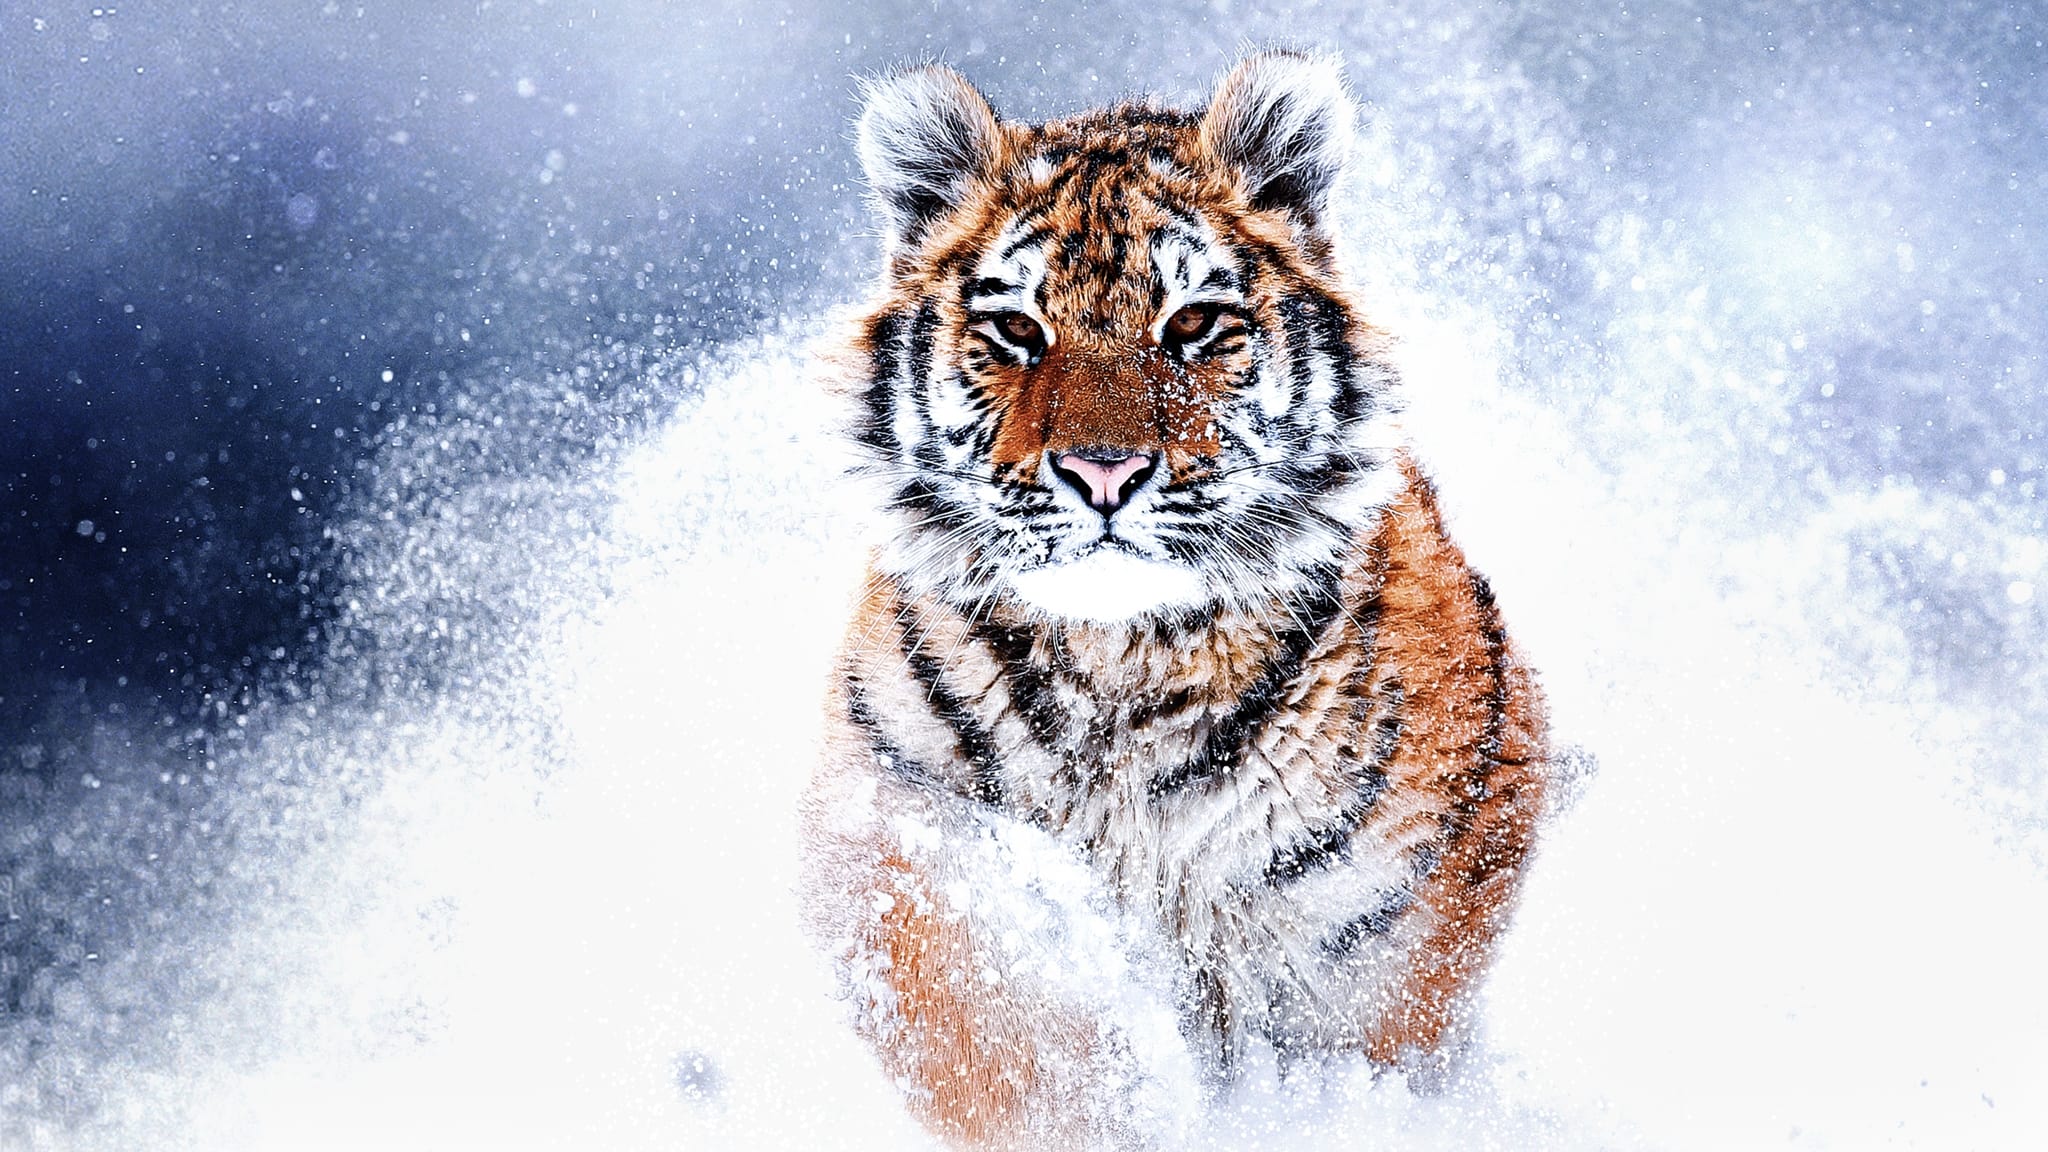 Russia’s Wild Tiger 2022 123movies